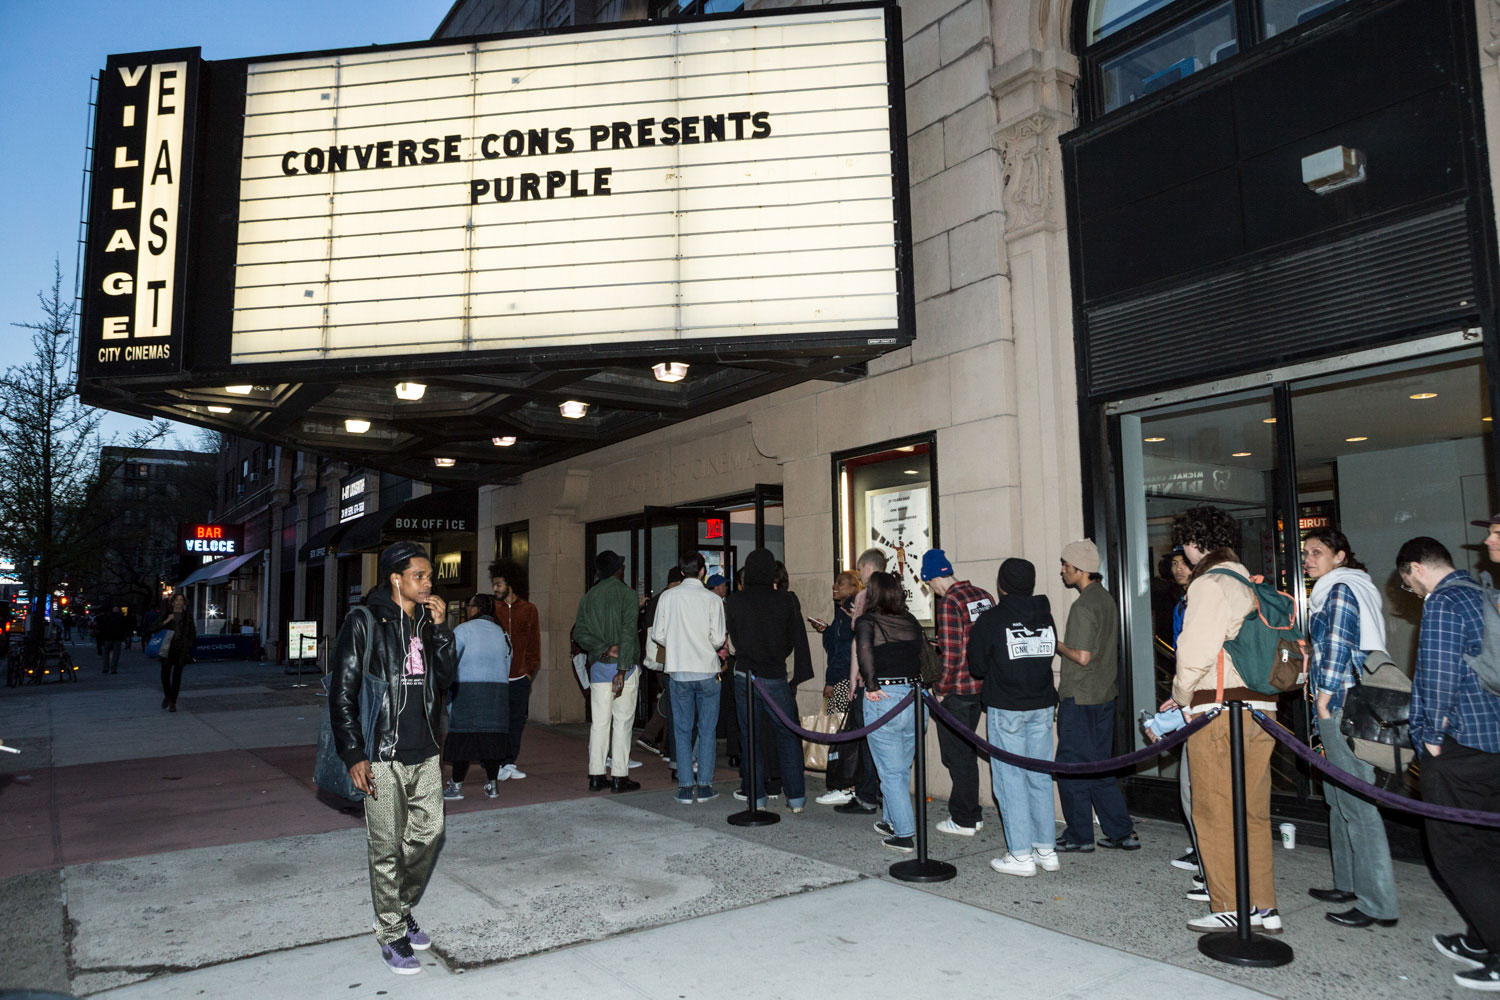 Thrasher - Converse Cons' "Purple" Premiere Photos